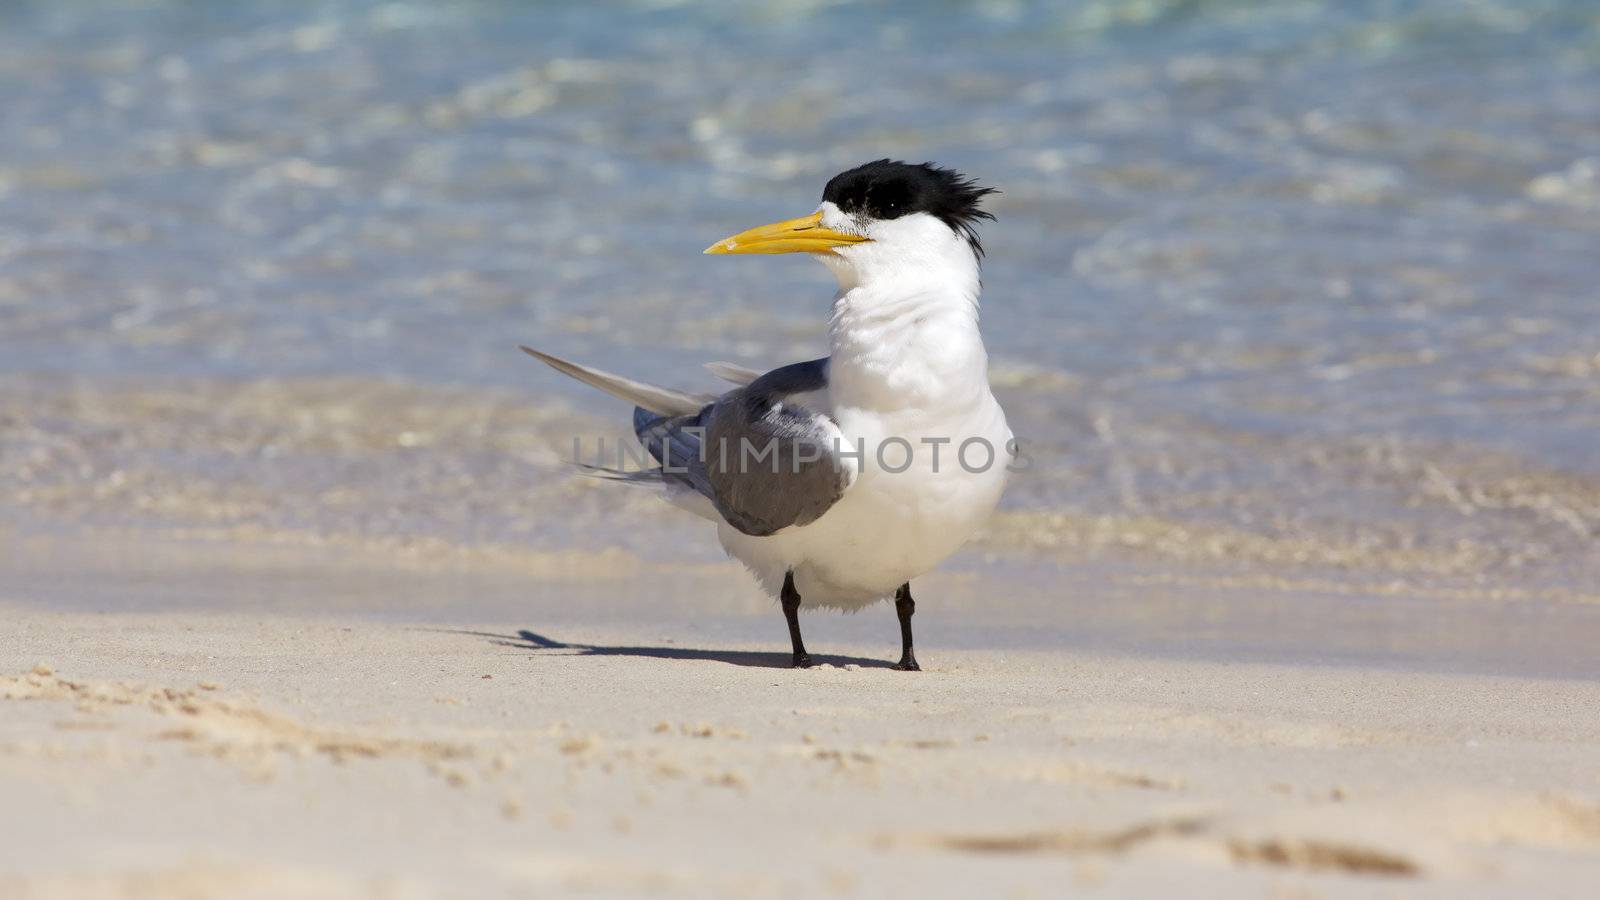 A Crested Tern on the beach of Rottnest Island, Western Australia.